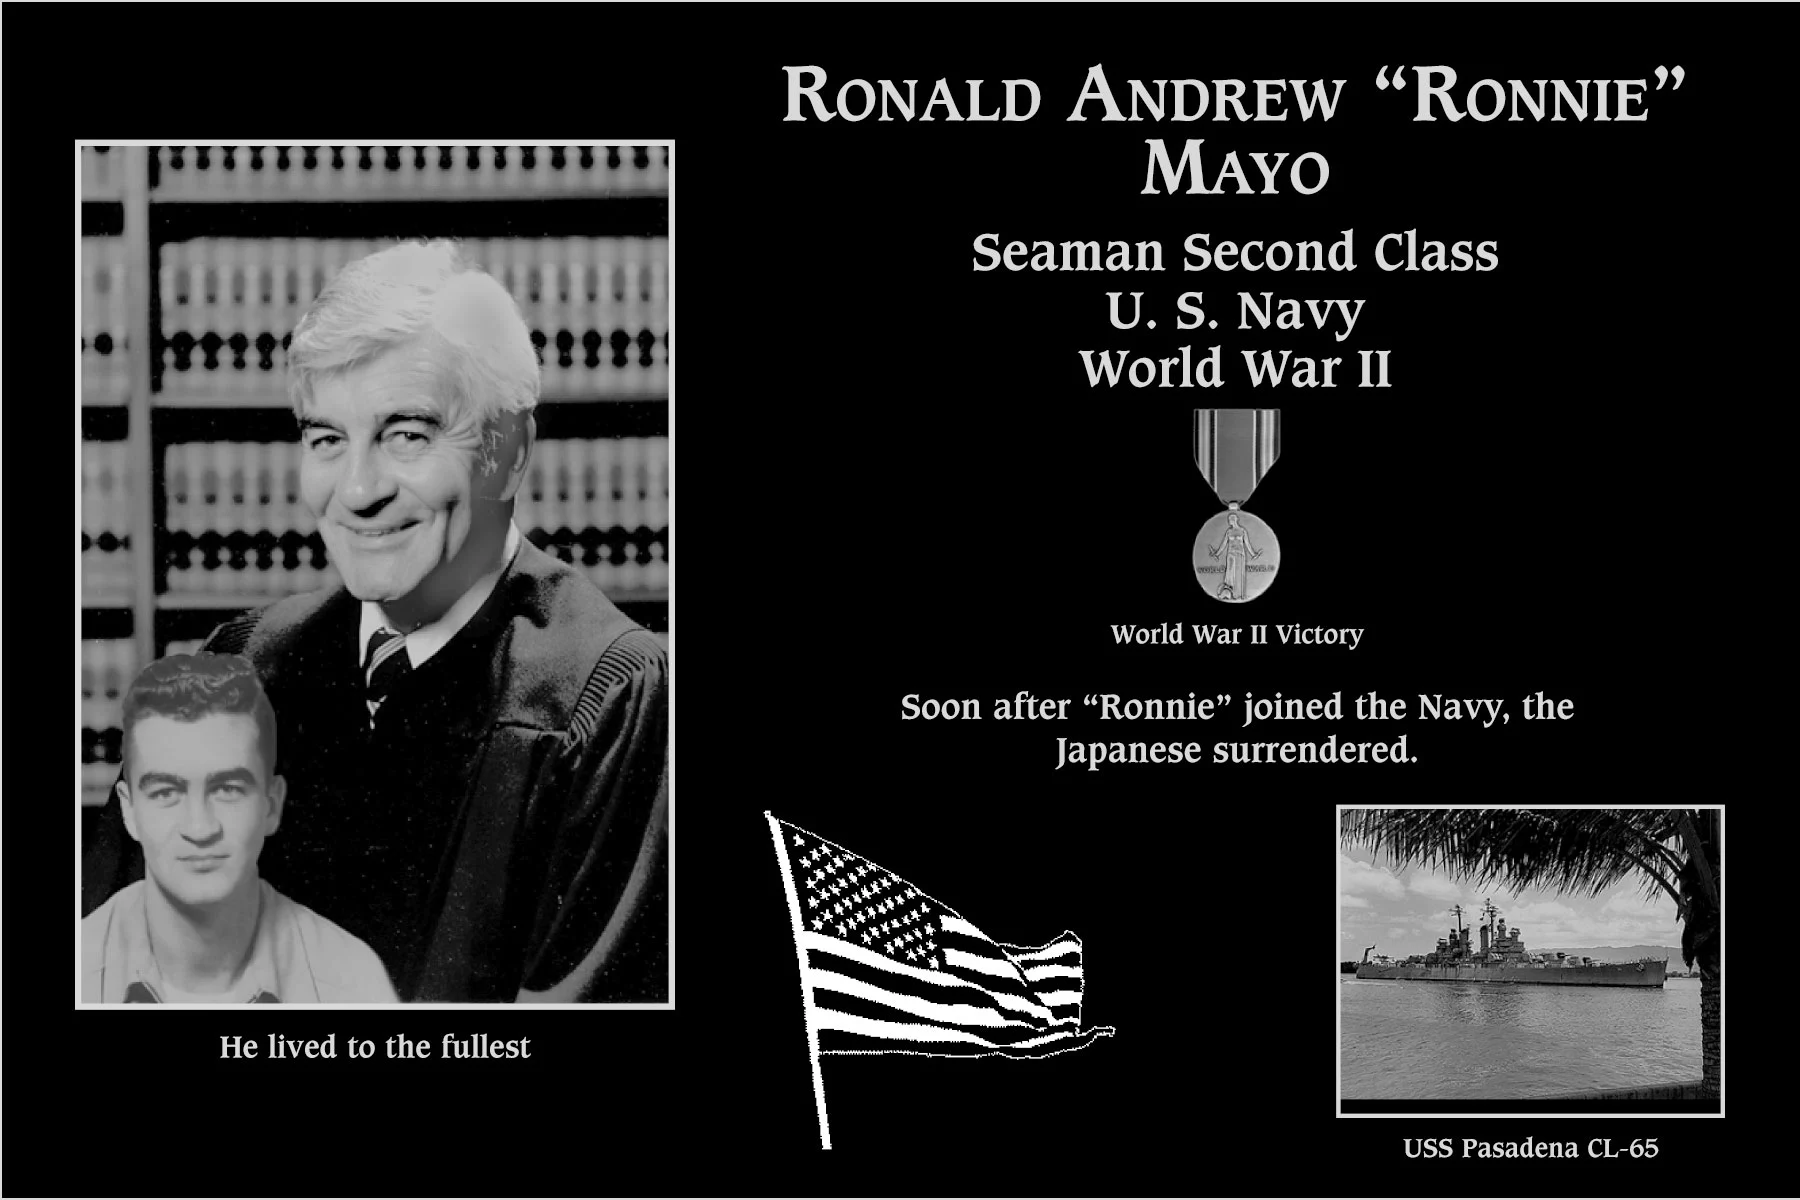 Ronald Andrew “Ronnie” Mayo